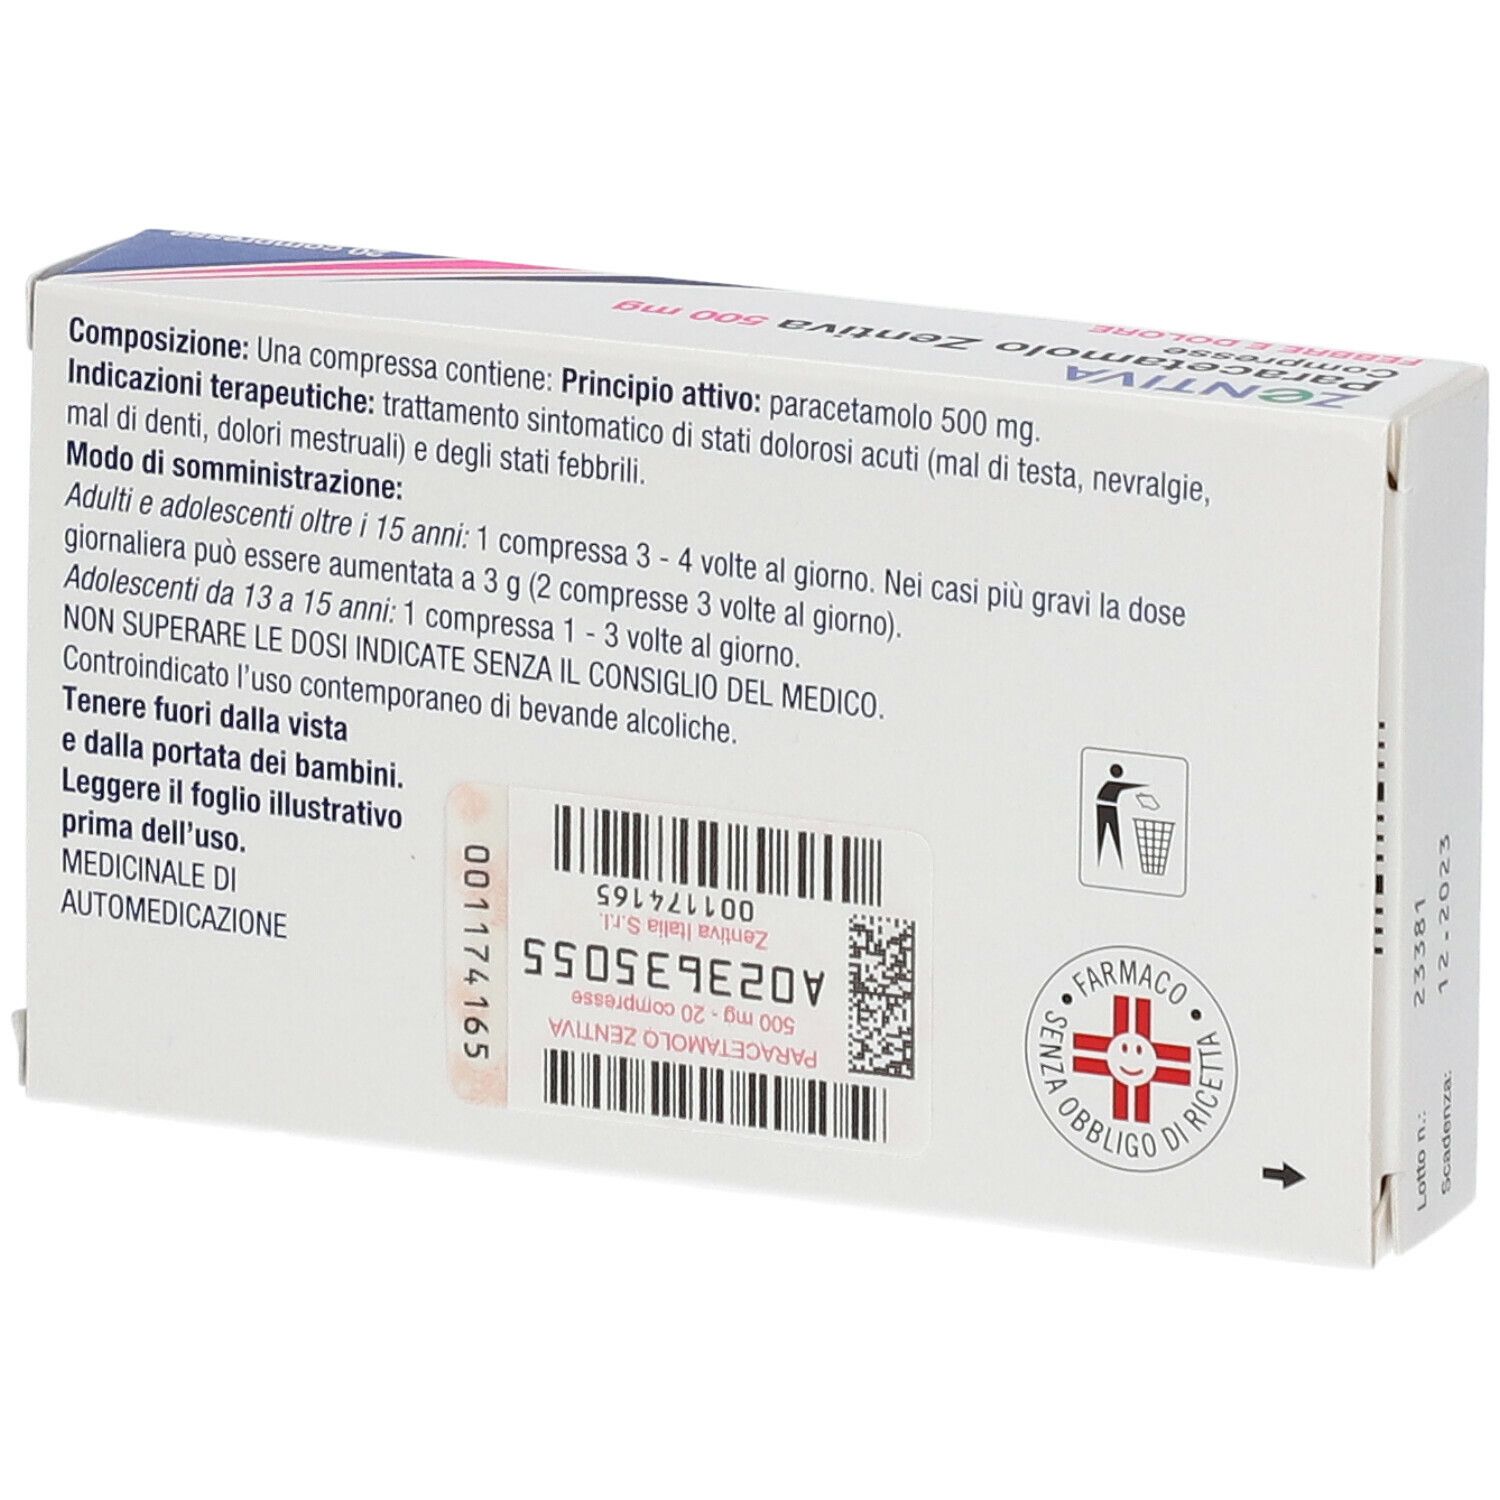 Paracetamolo Zentiva 500mg 20 Compresse